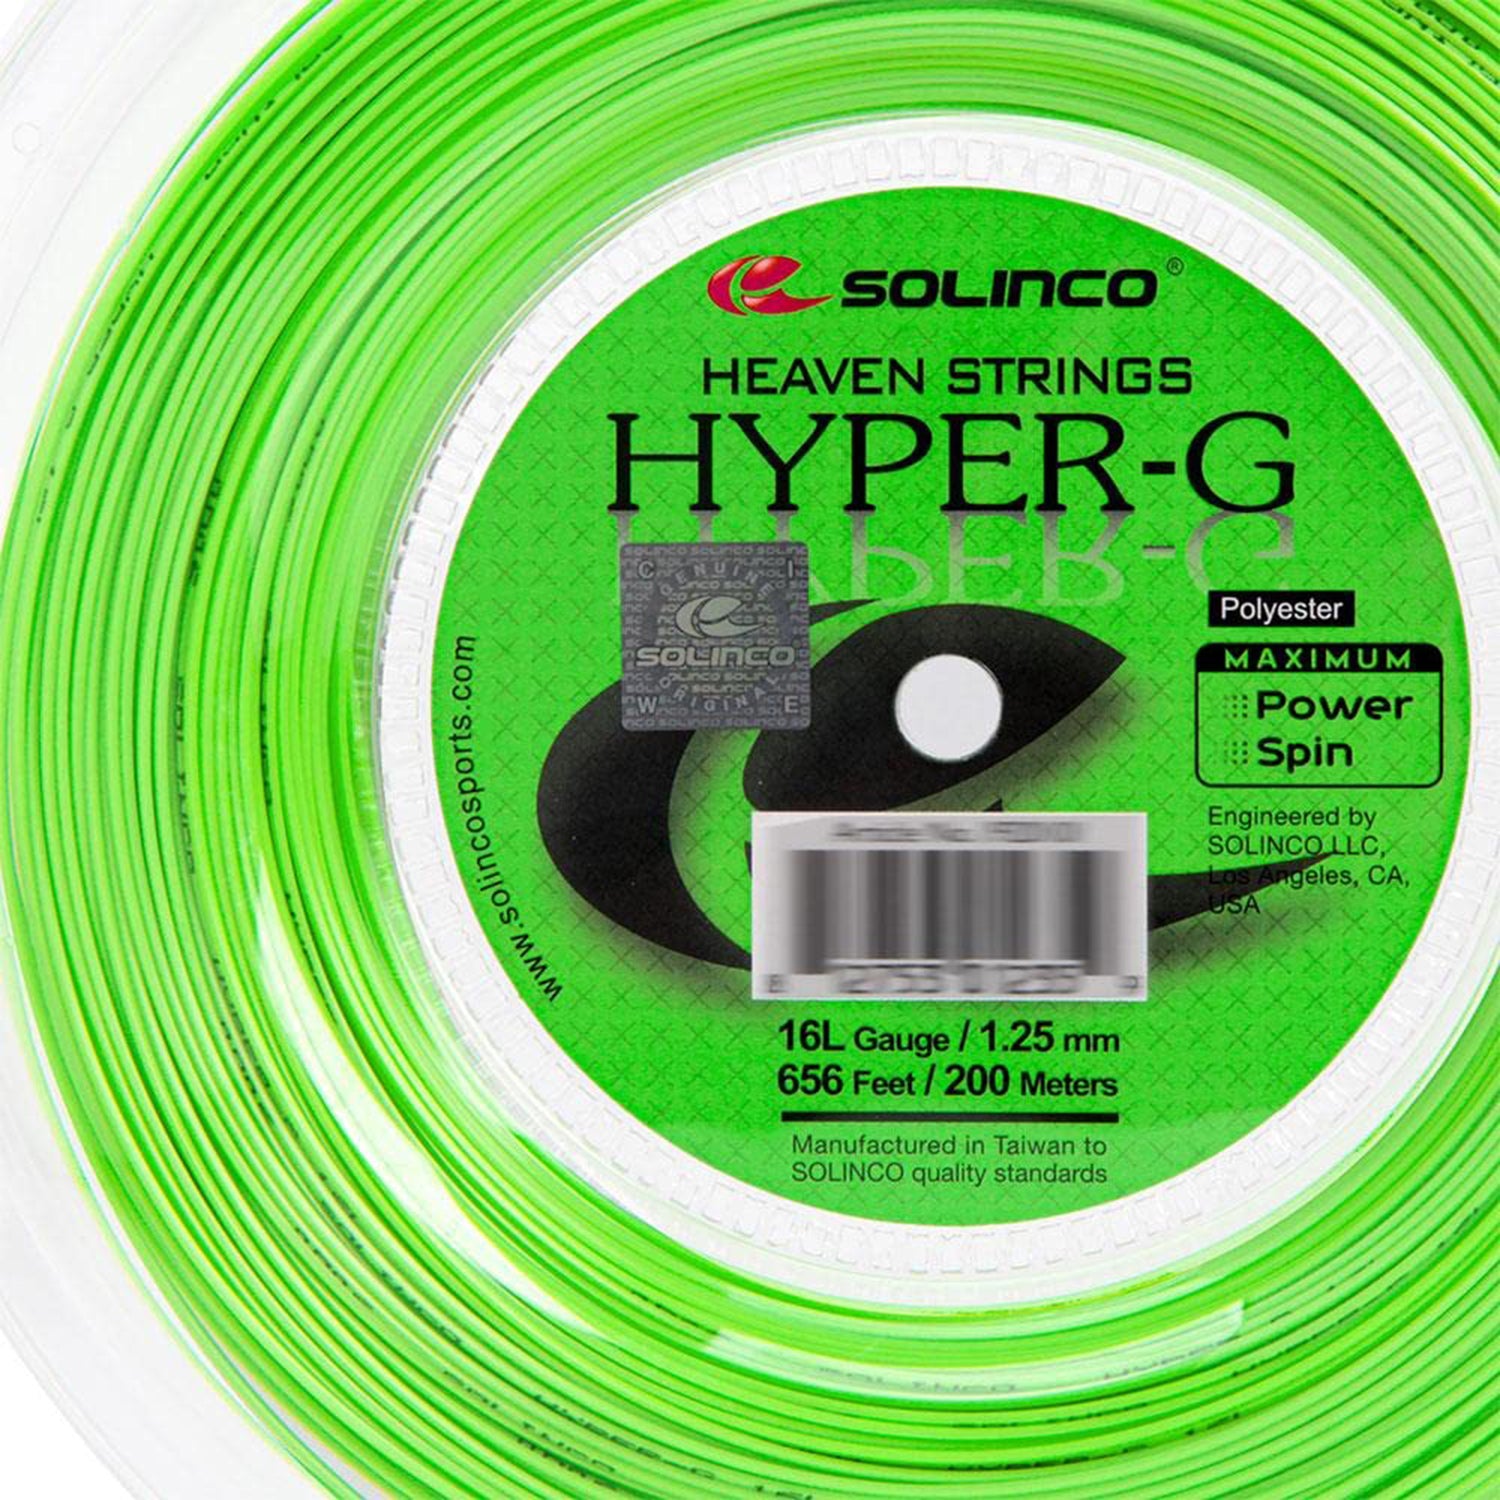 Hyper G 200M Tennis String Reel, Green - Best Price online Prokicksports.com